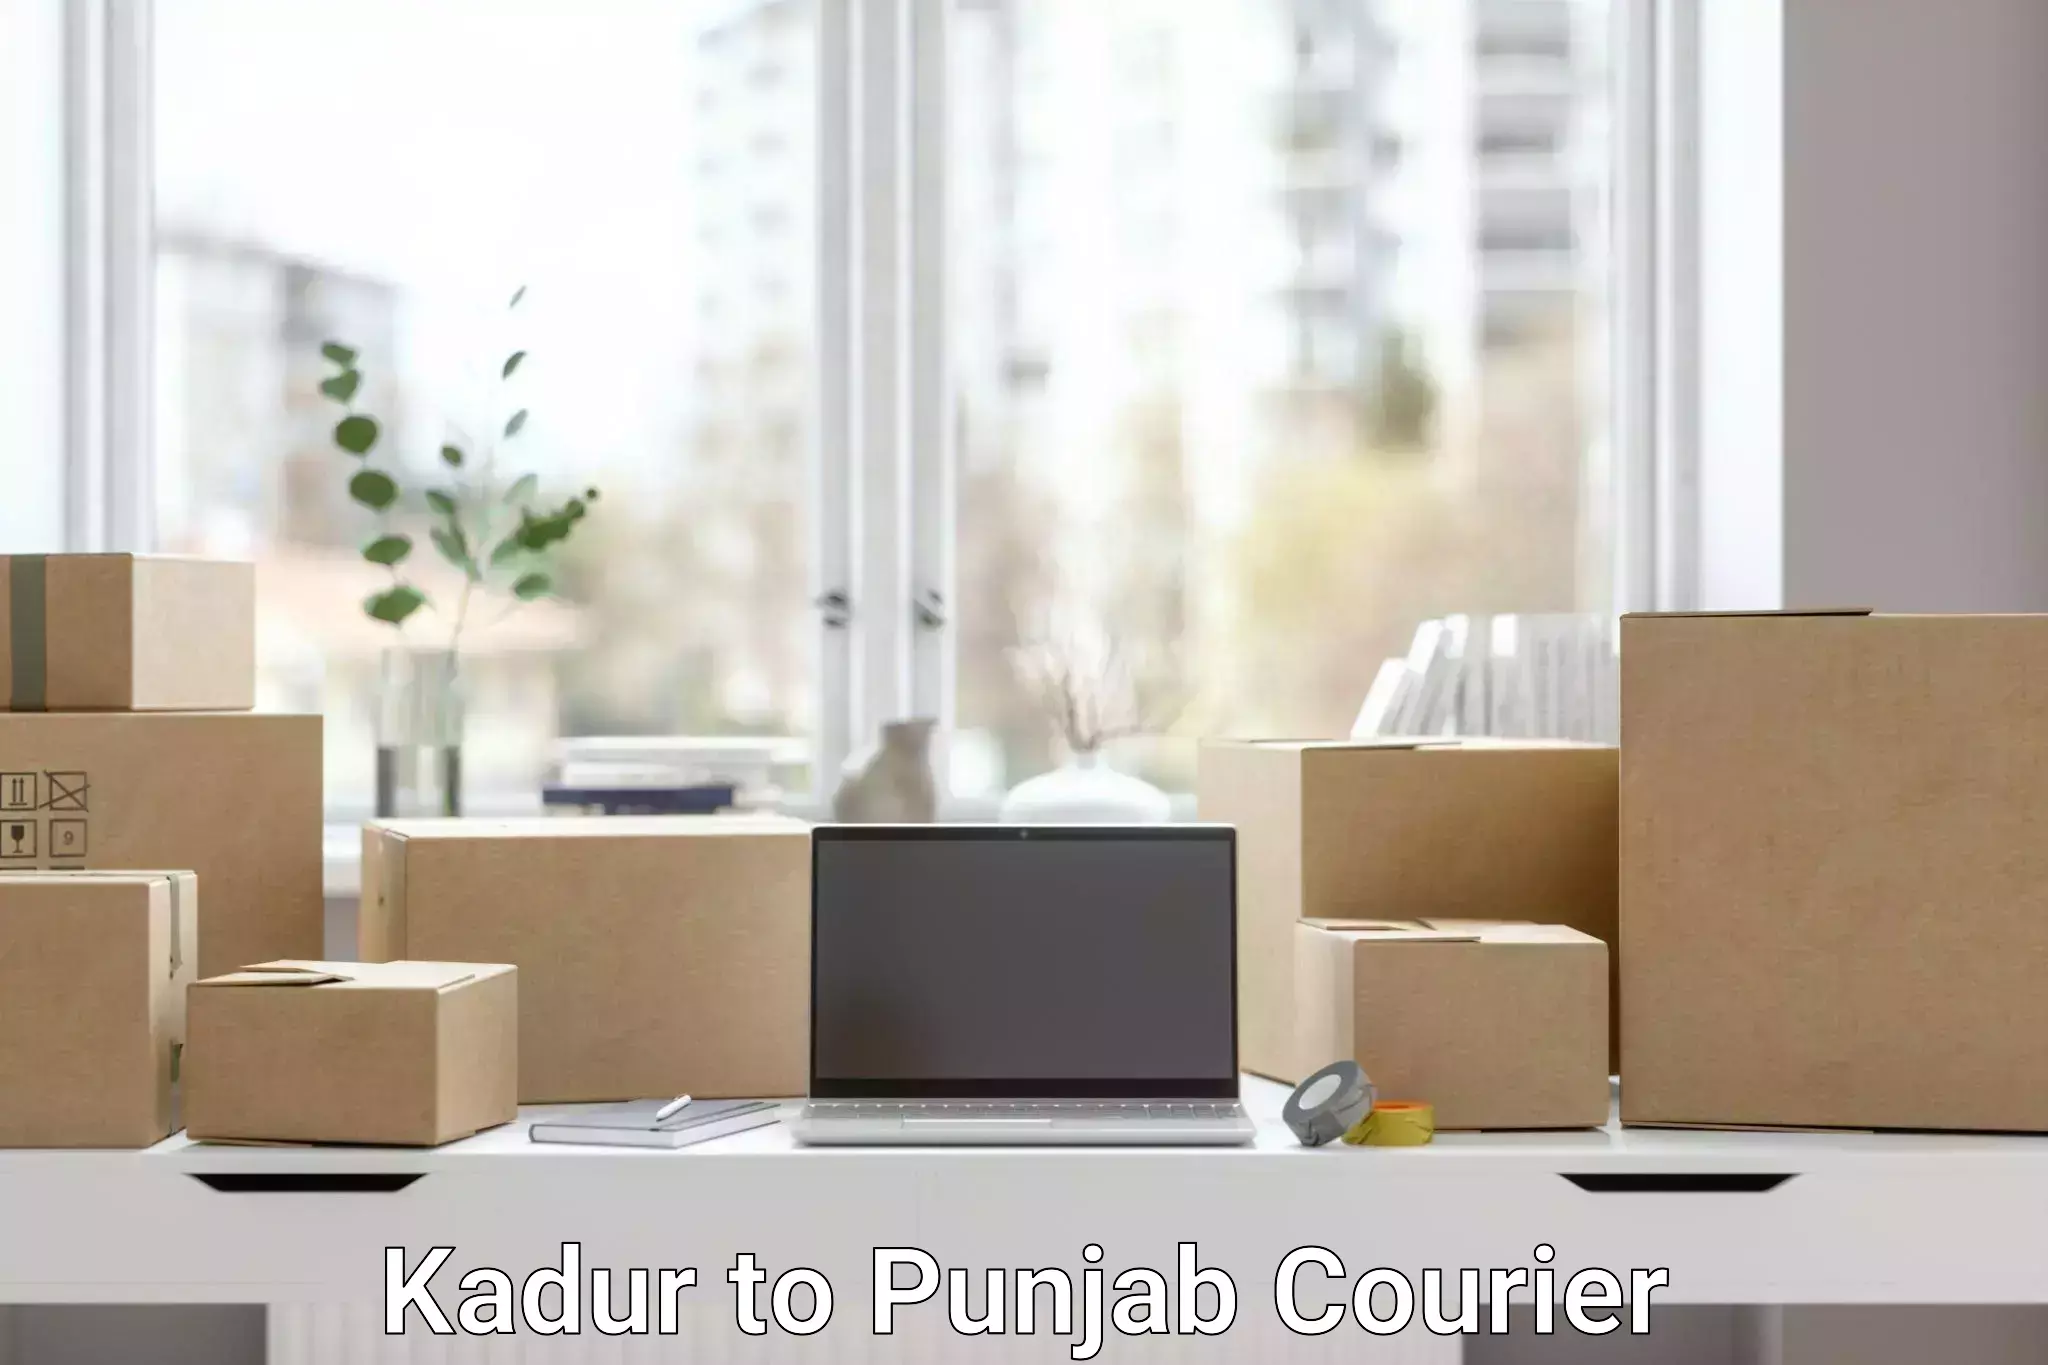 Efficient order fulfillment Kadur to Punjab